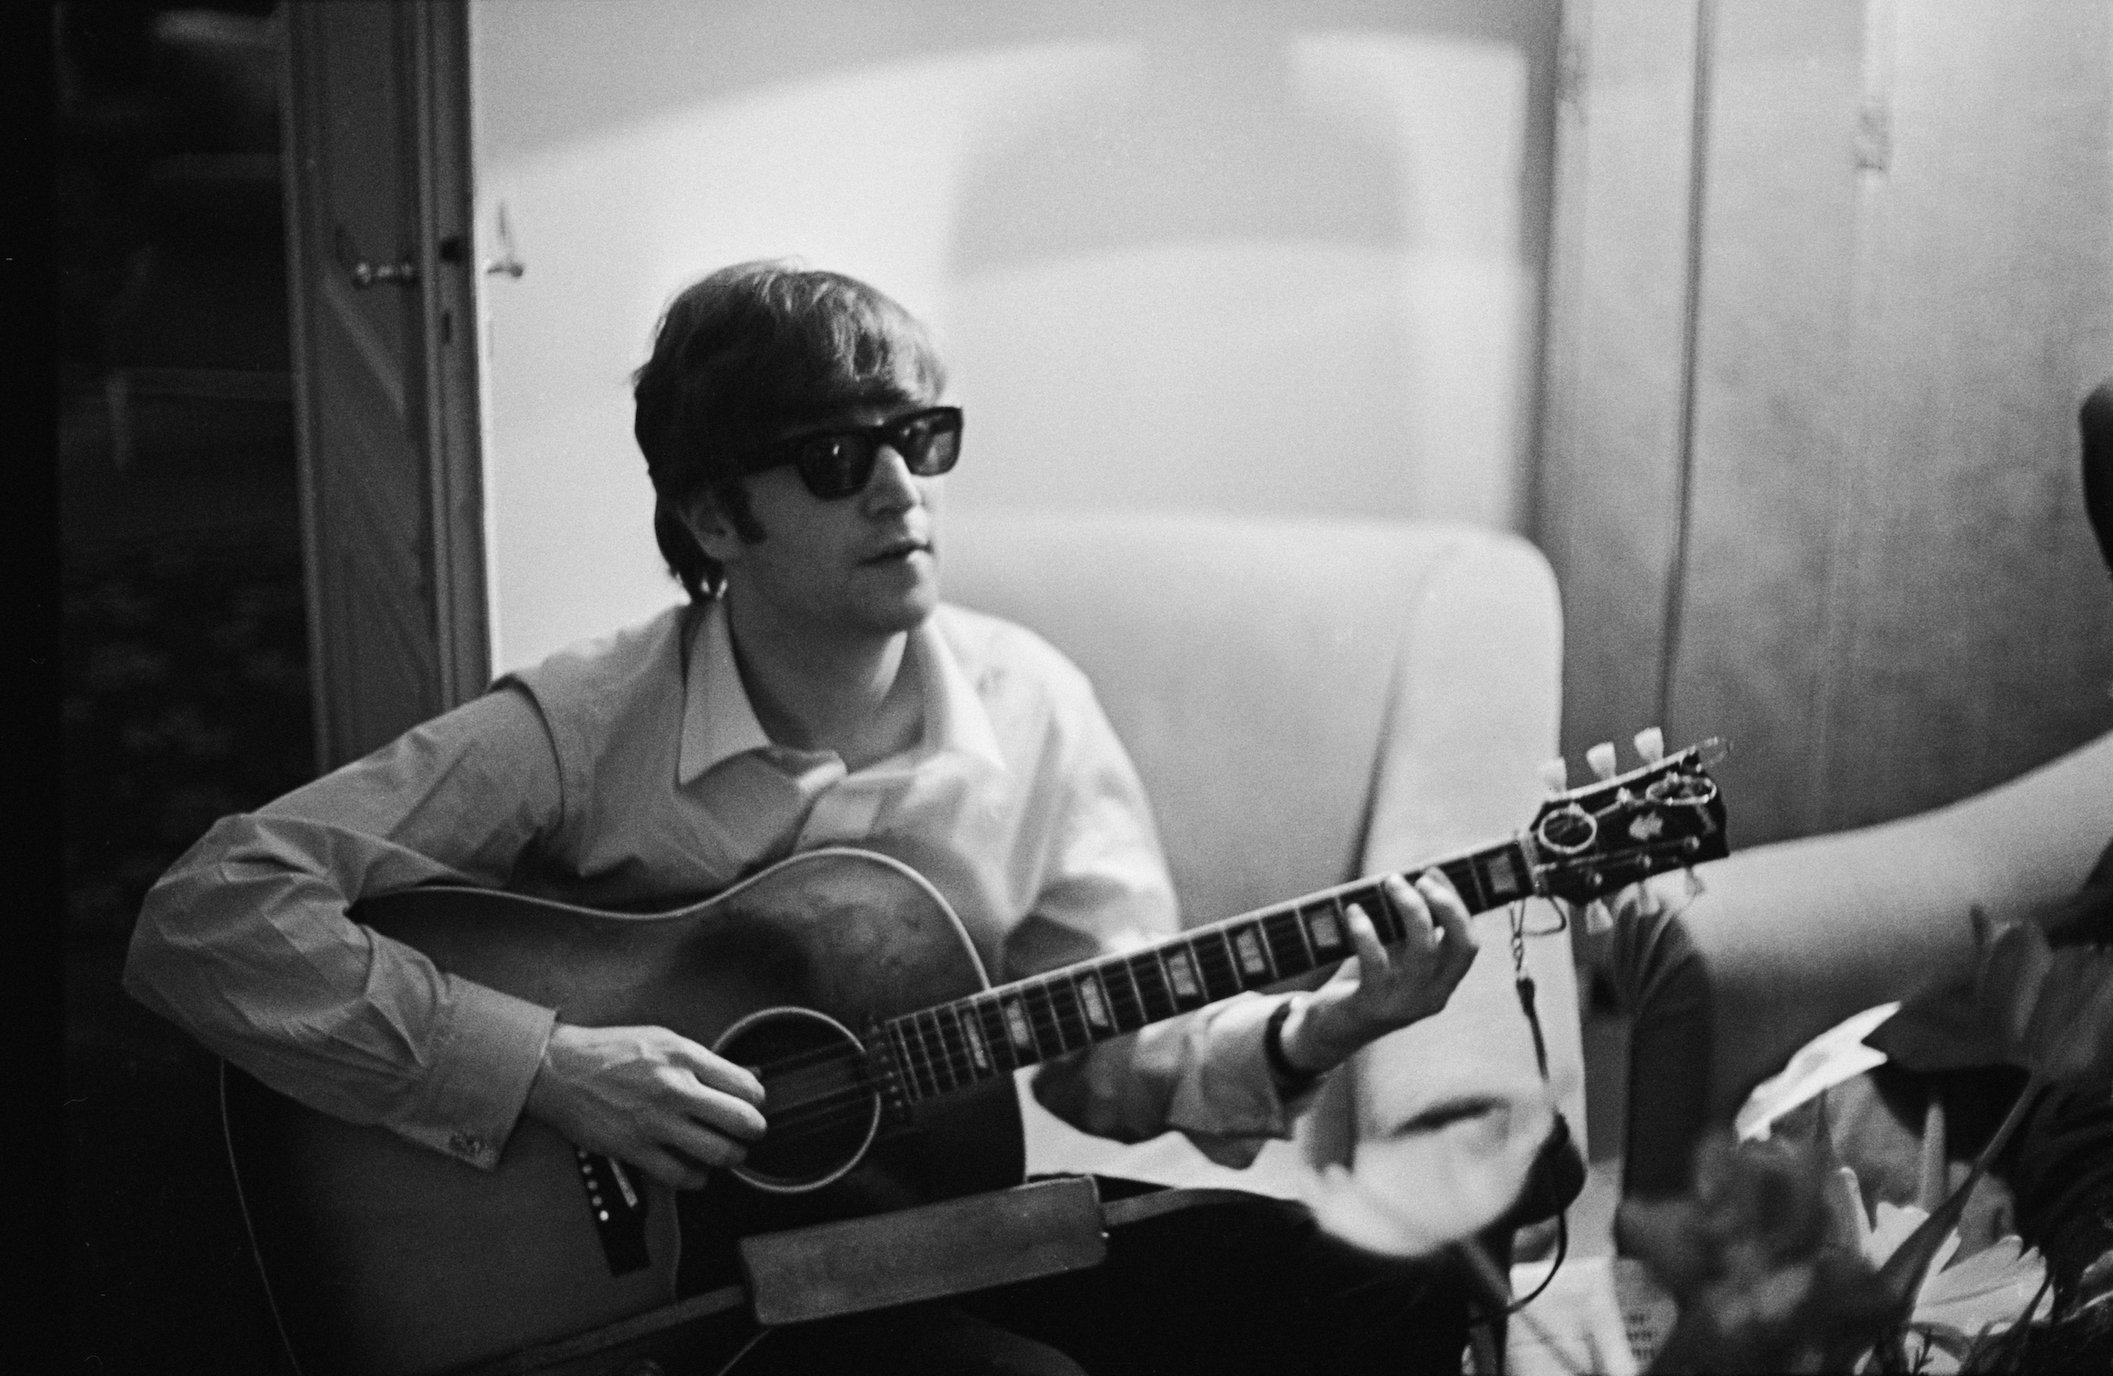 John Lennon of The Beatles plays a guitar in Paris